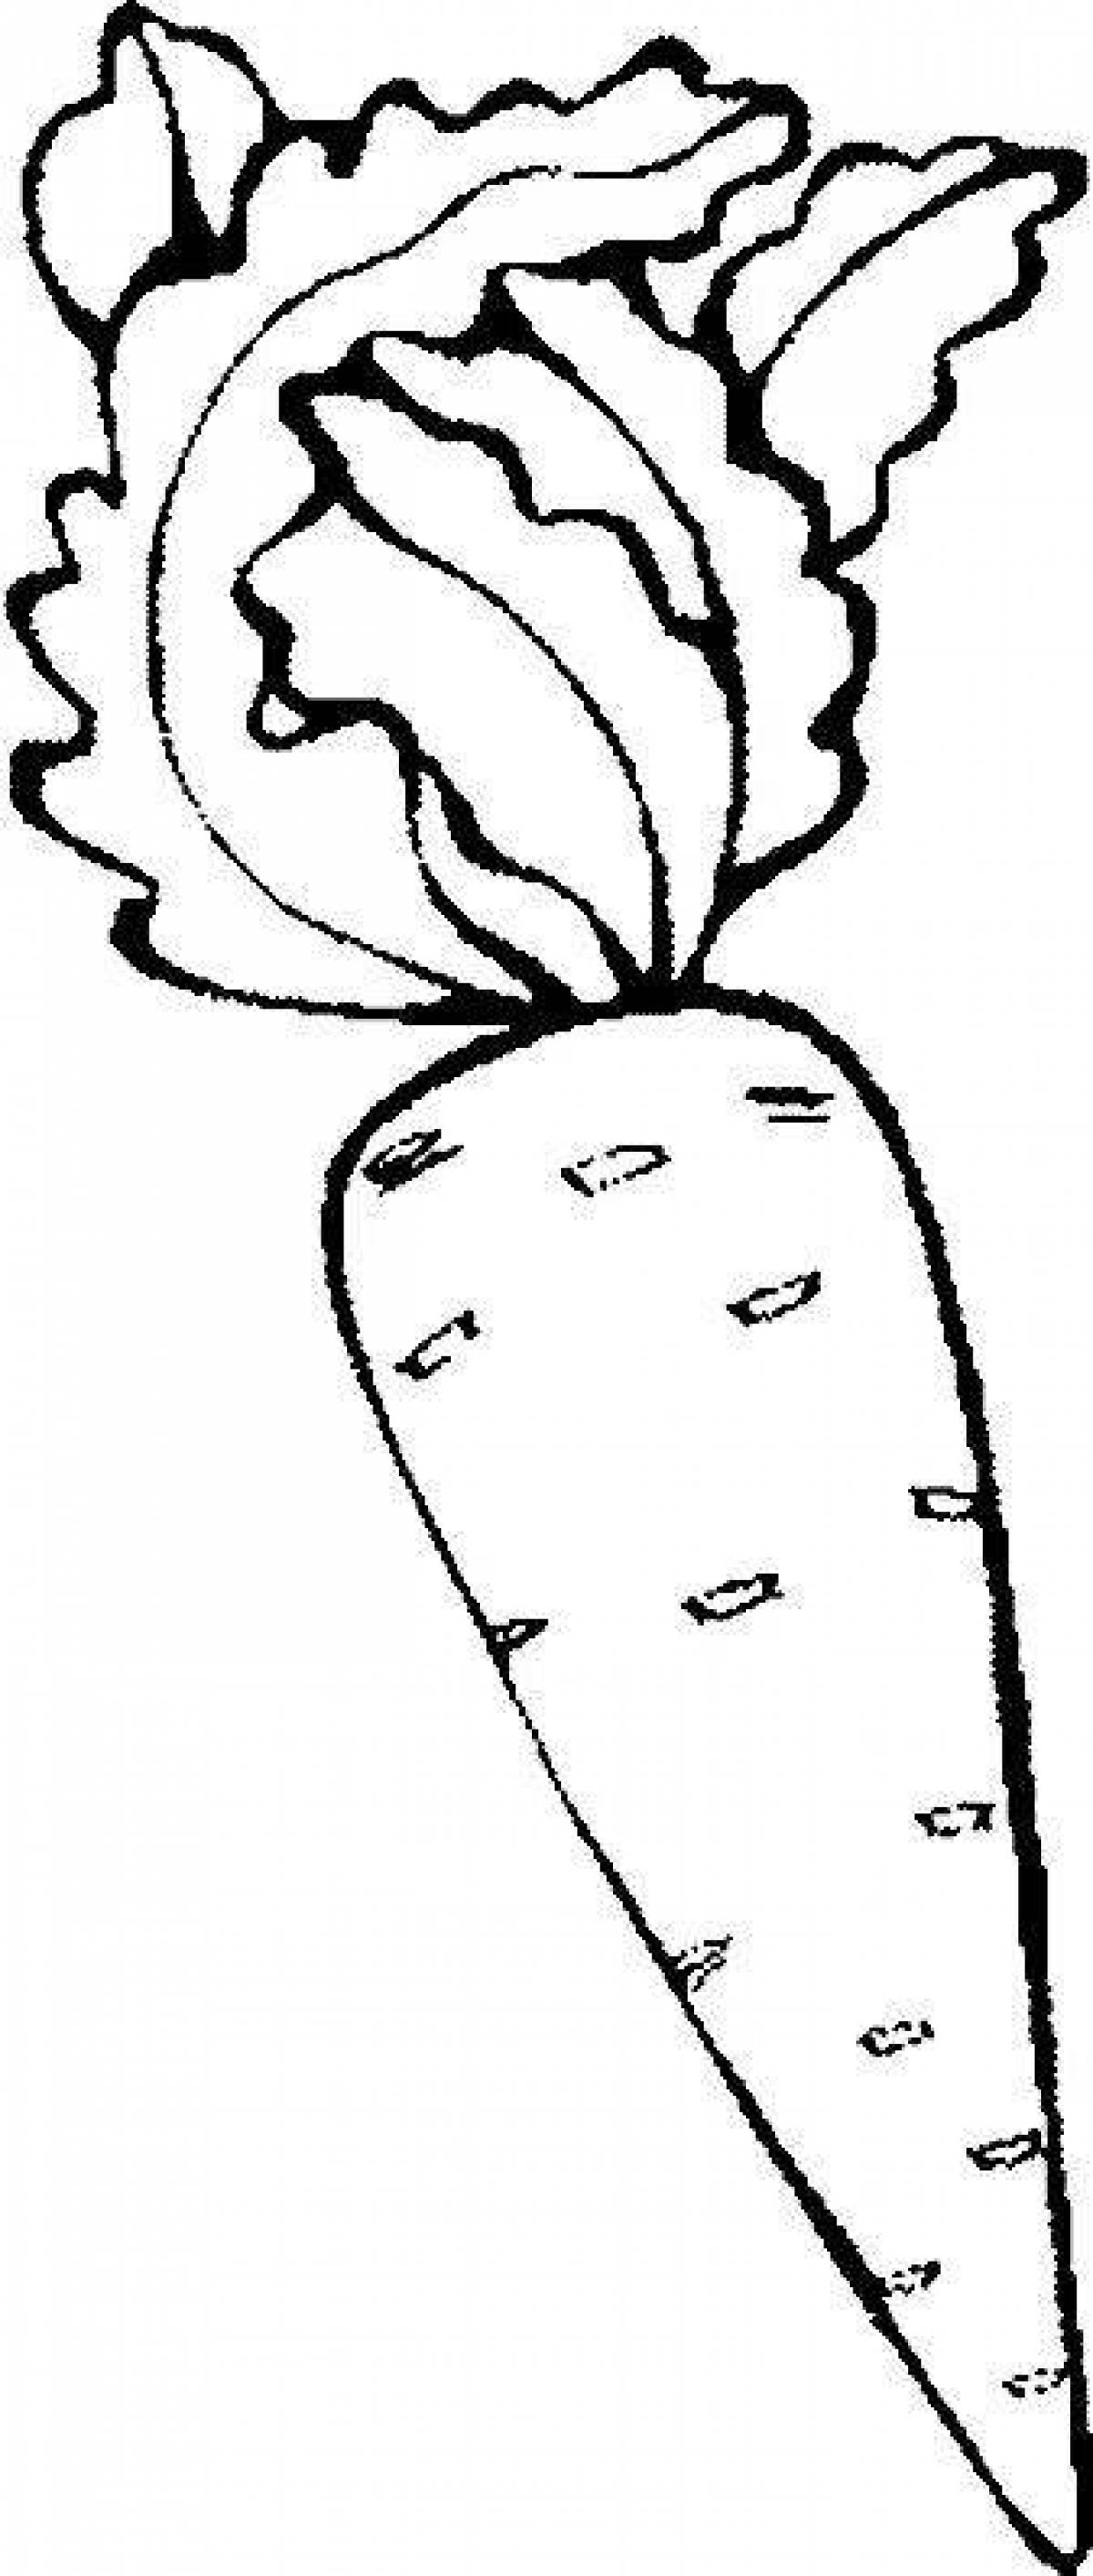 Joyful carrot illustration